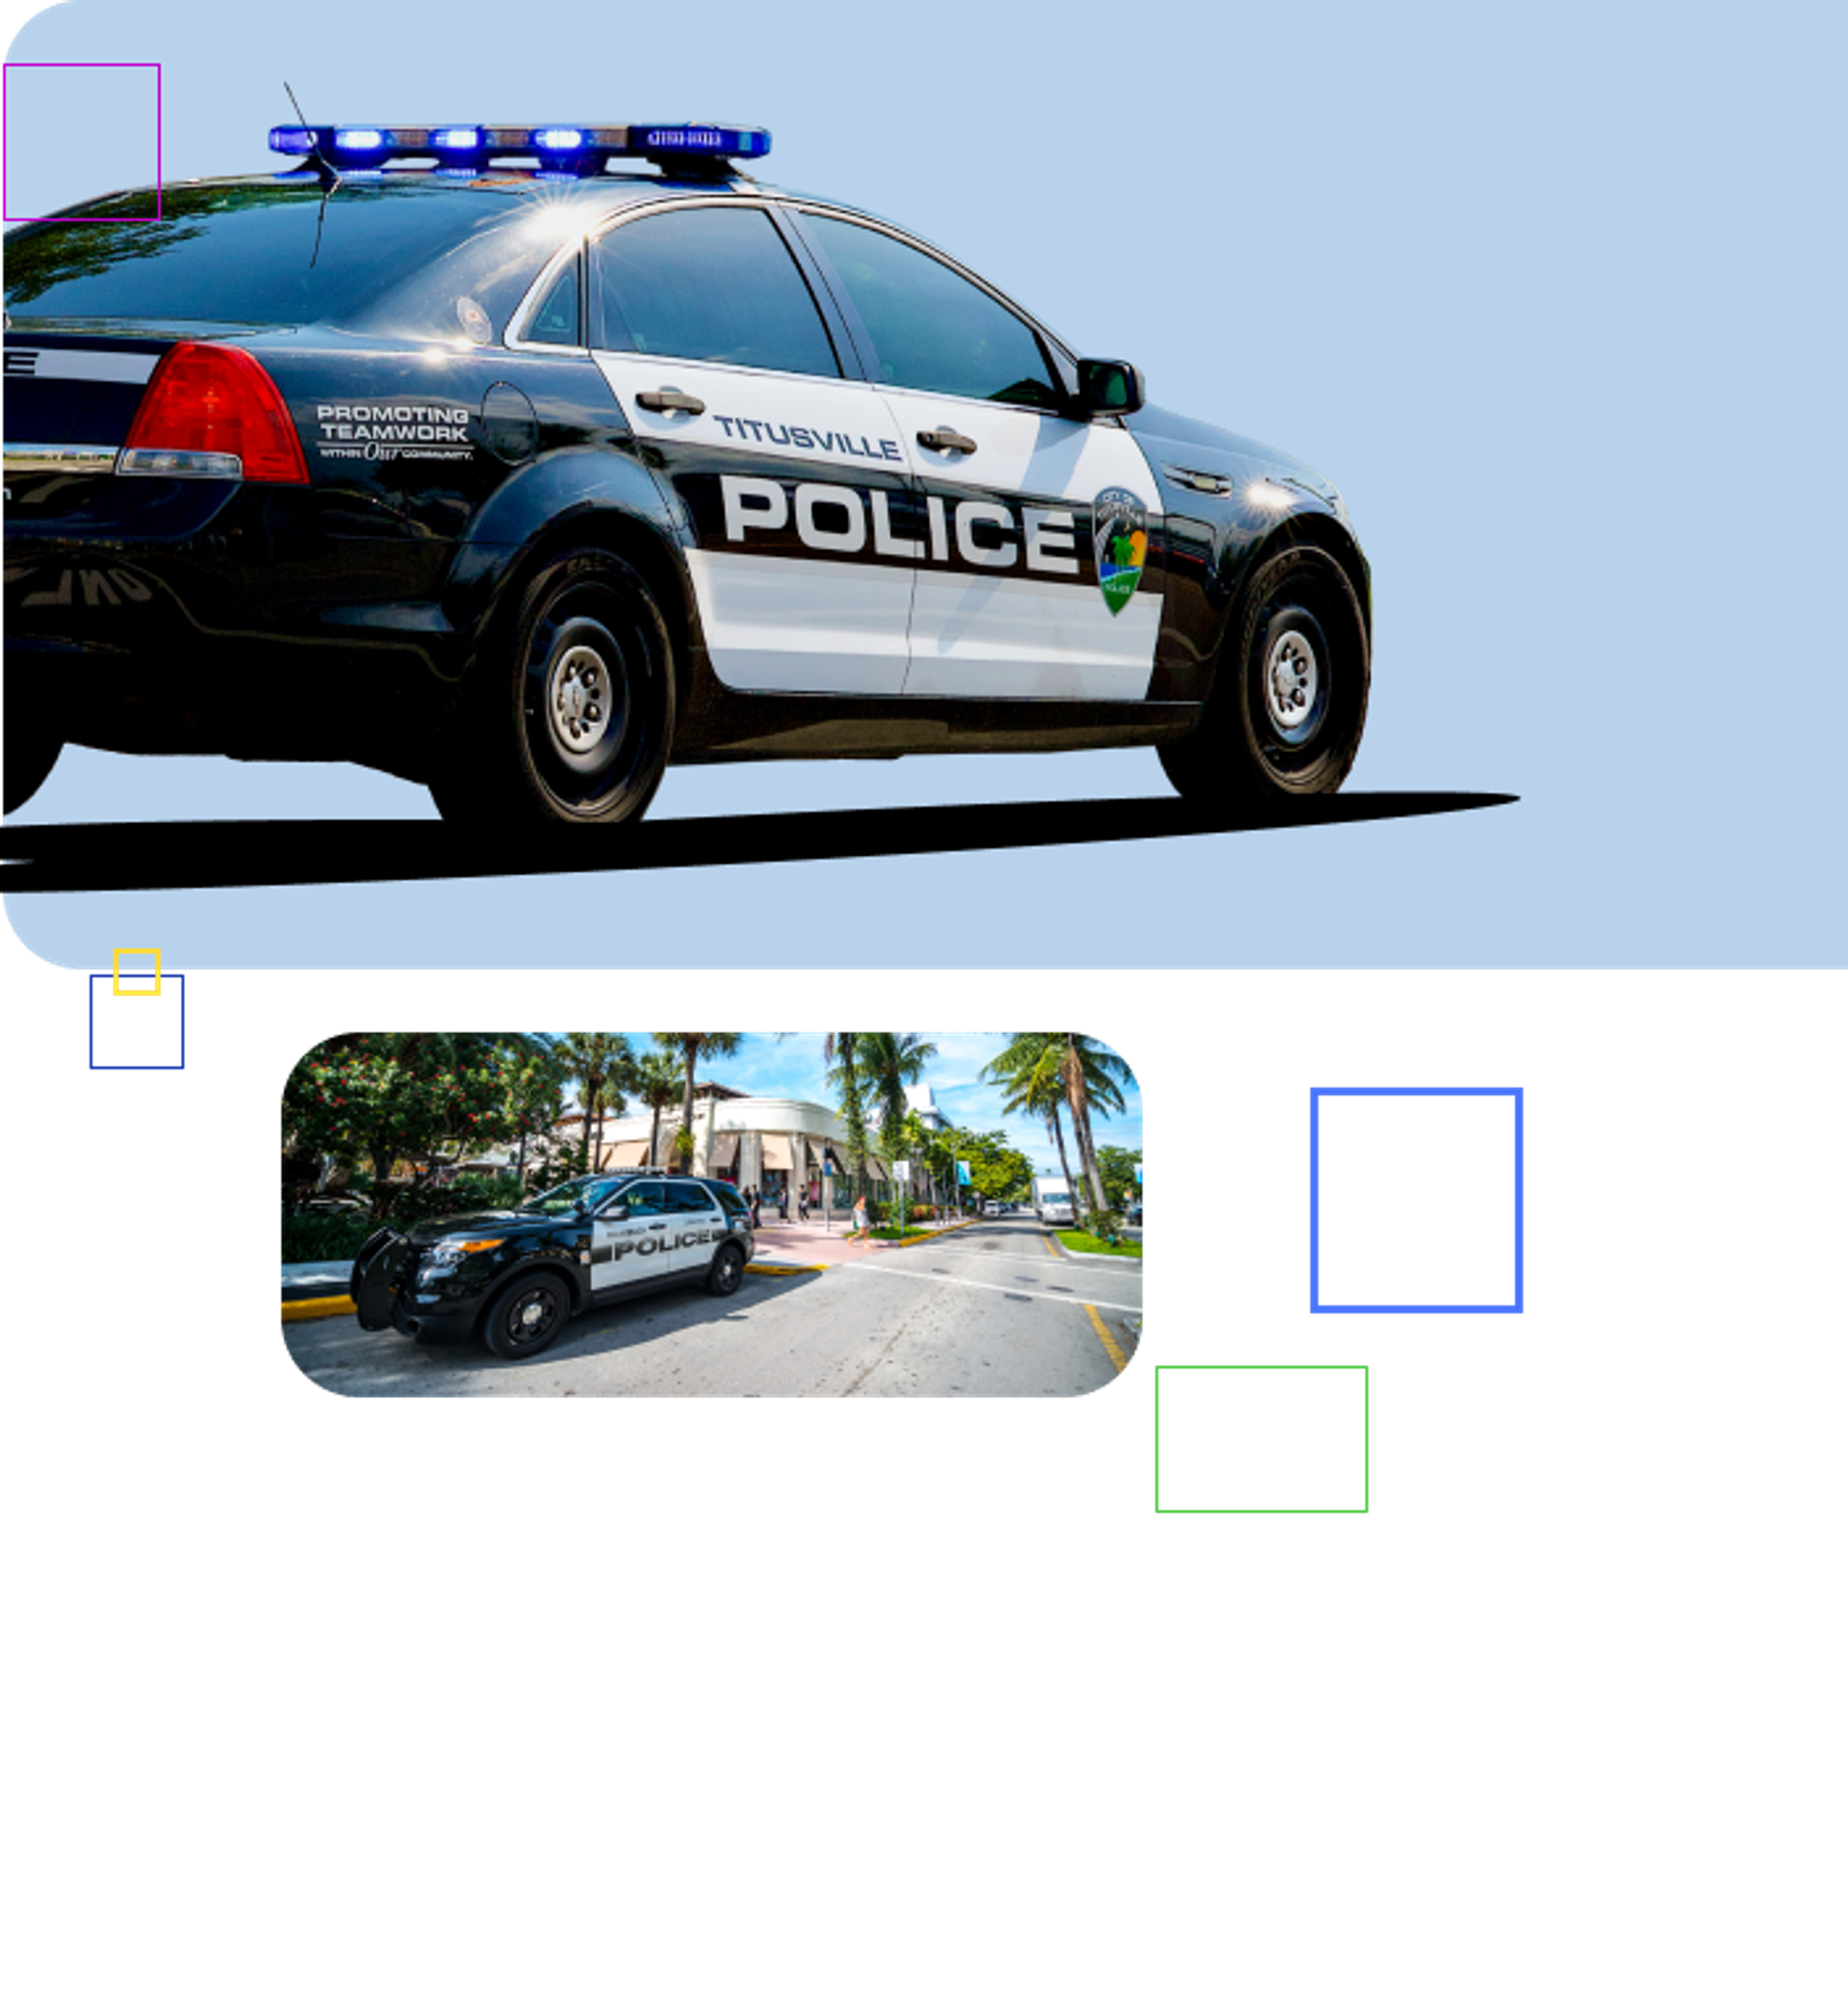 Police Vehicles